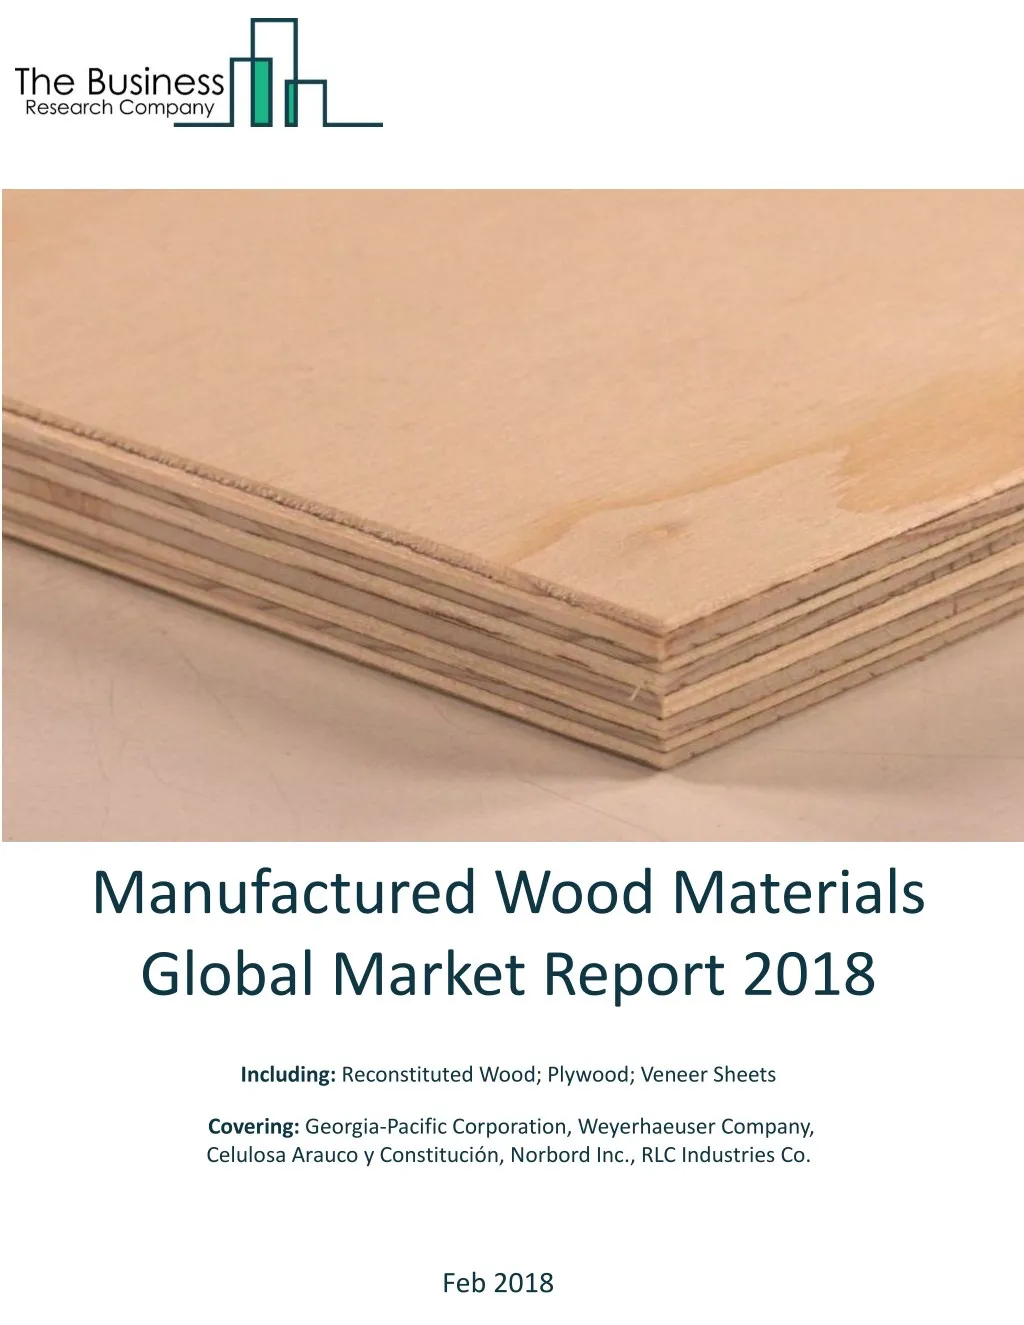 manufactured wood materials global market report